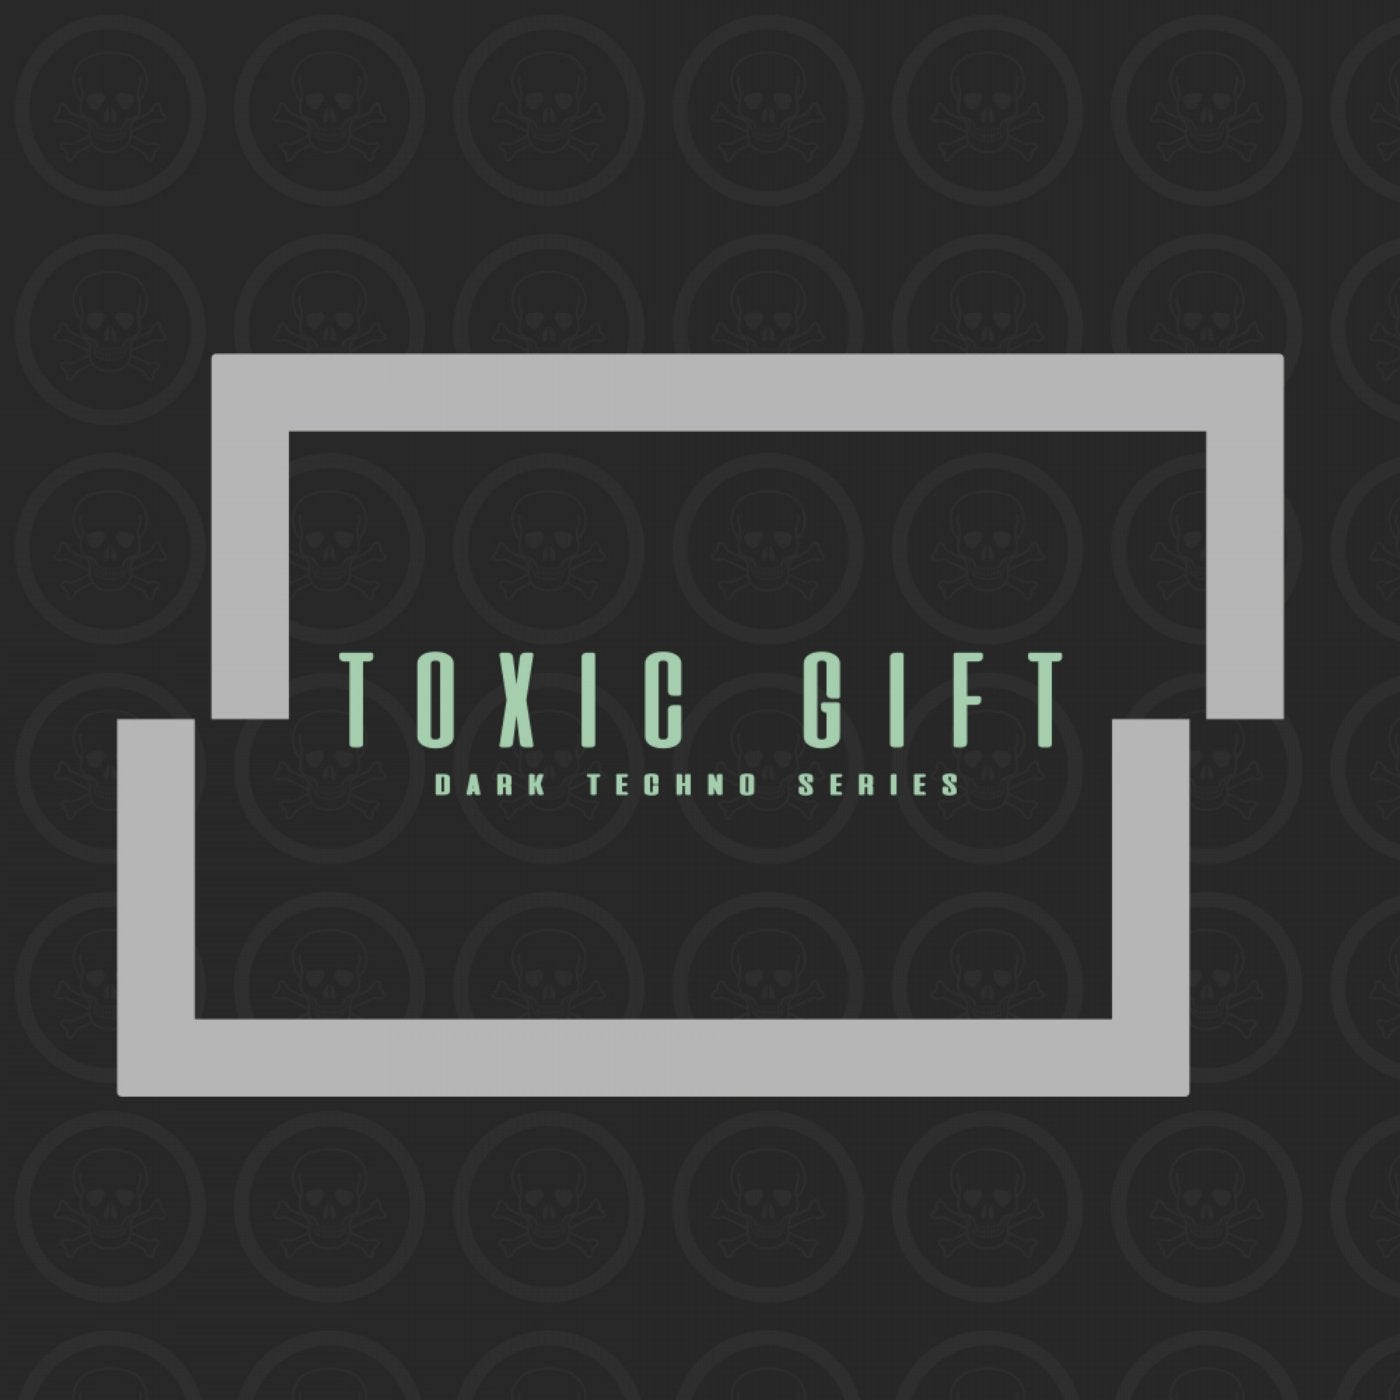 Toxic Gift Dark Techno Series